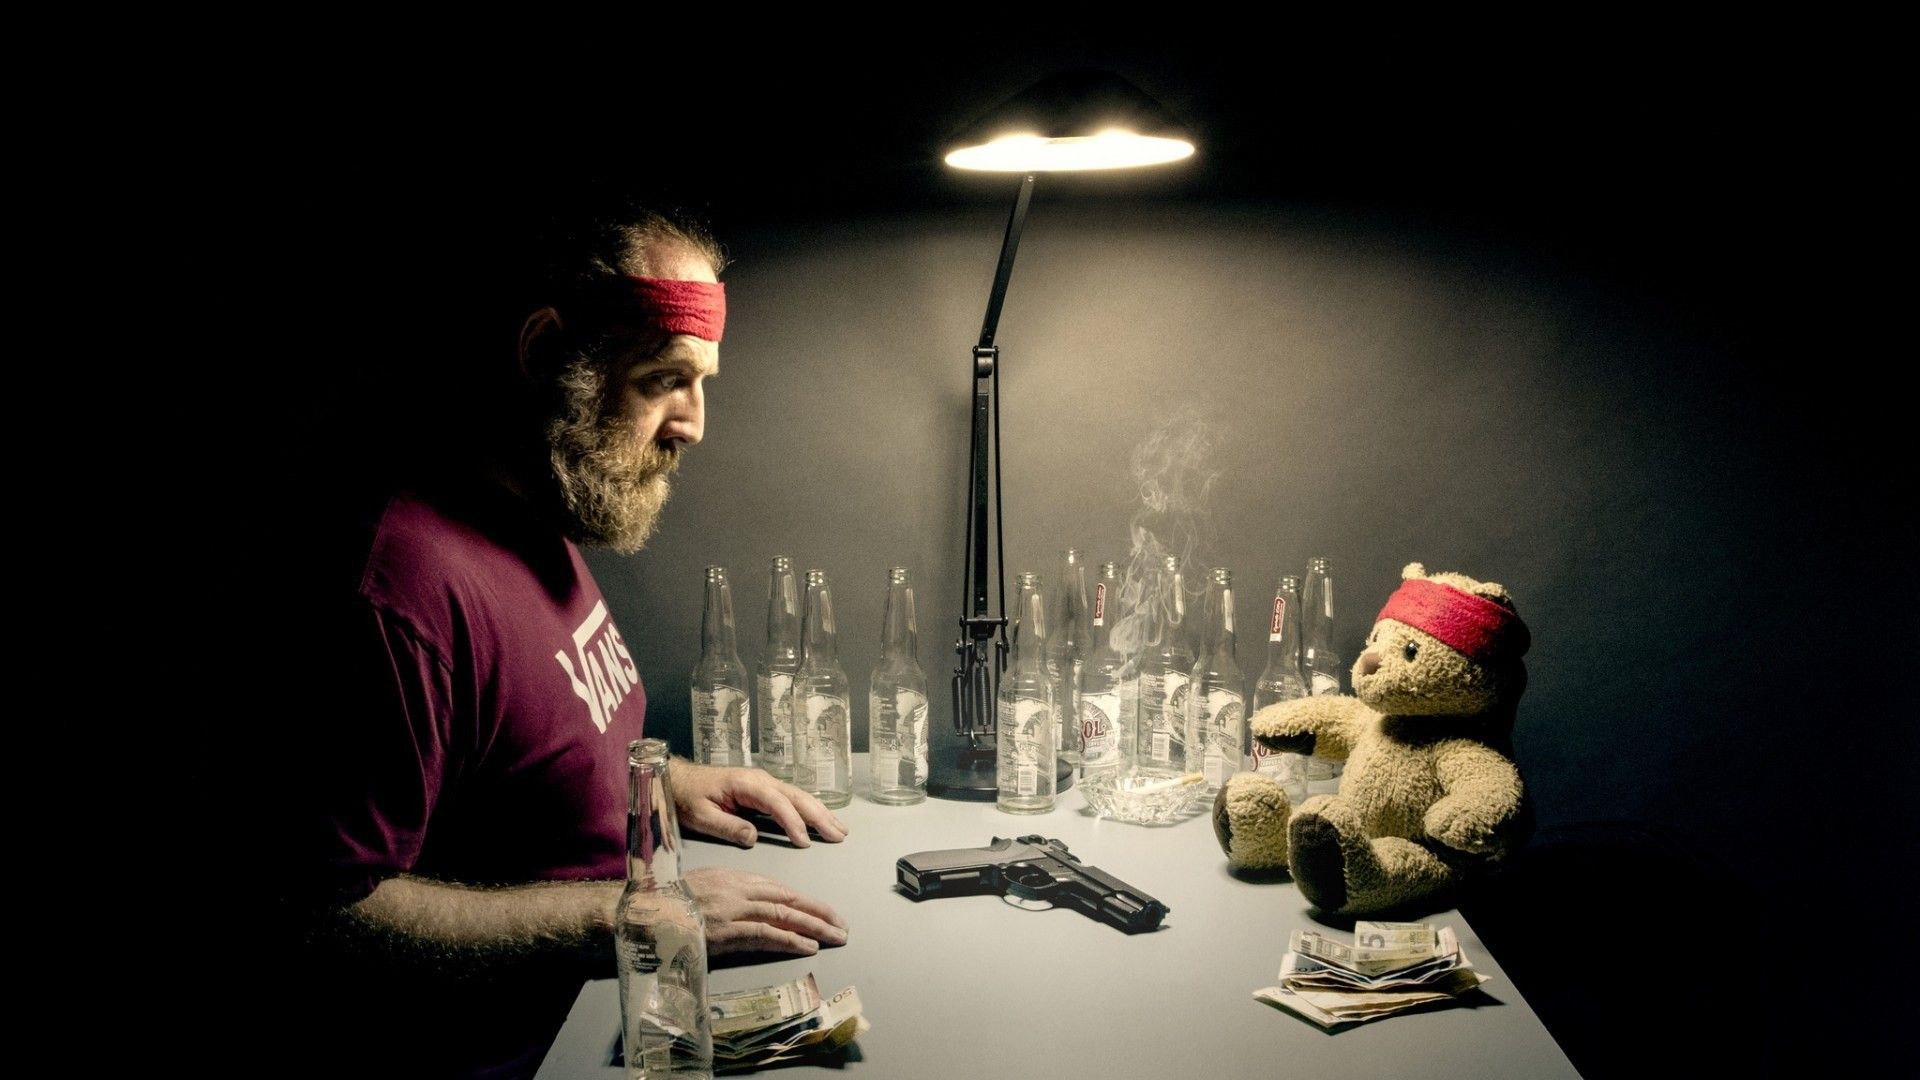 men, Digital art, Humor, Teddy bears, Gun, Russian roulette